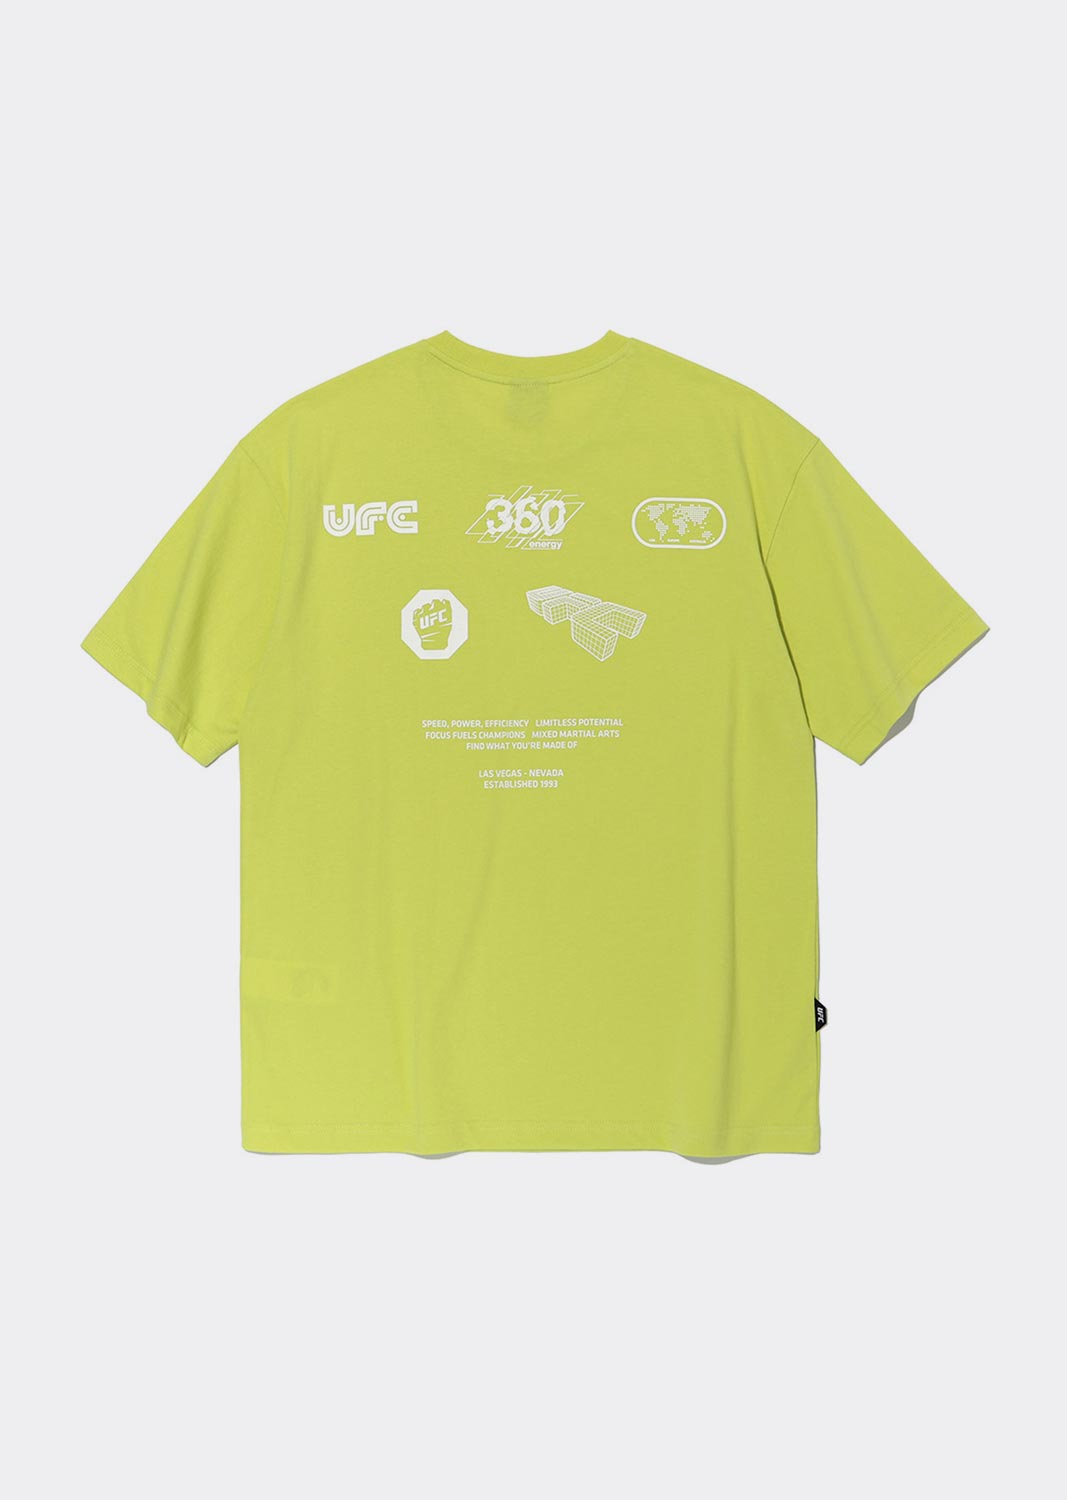 UFC 심볼 그래픽 티셔츠 라임 U2SST2327LM